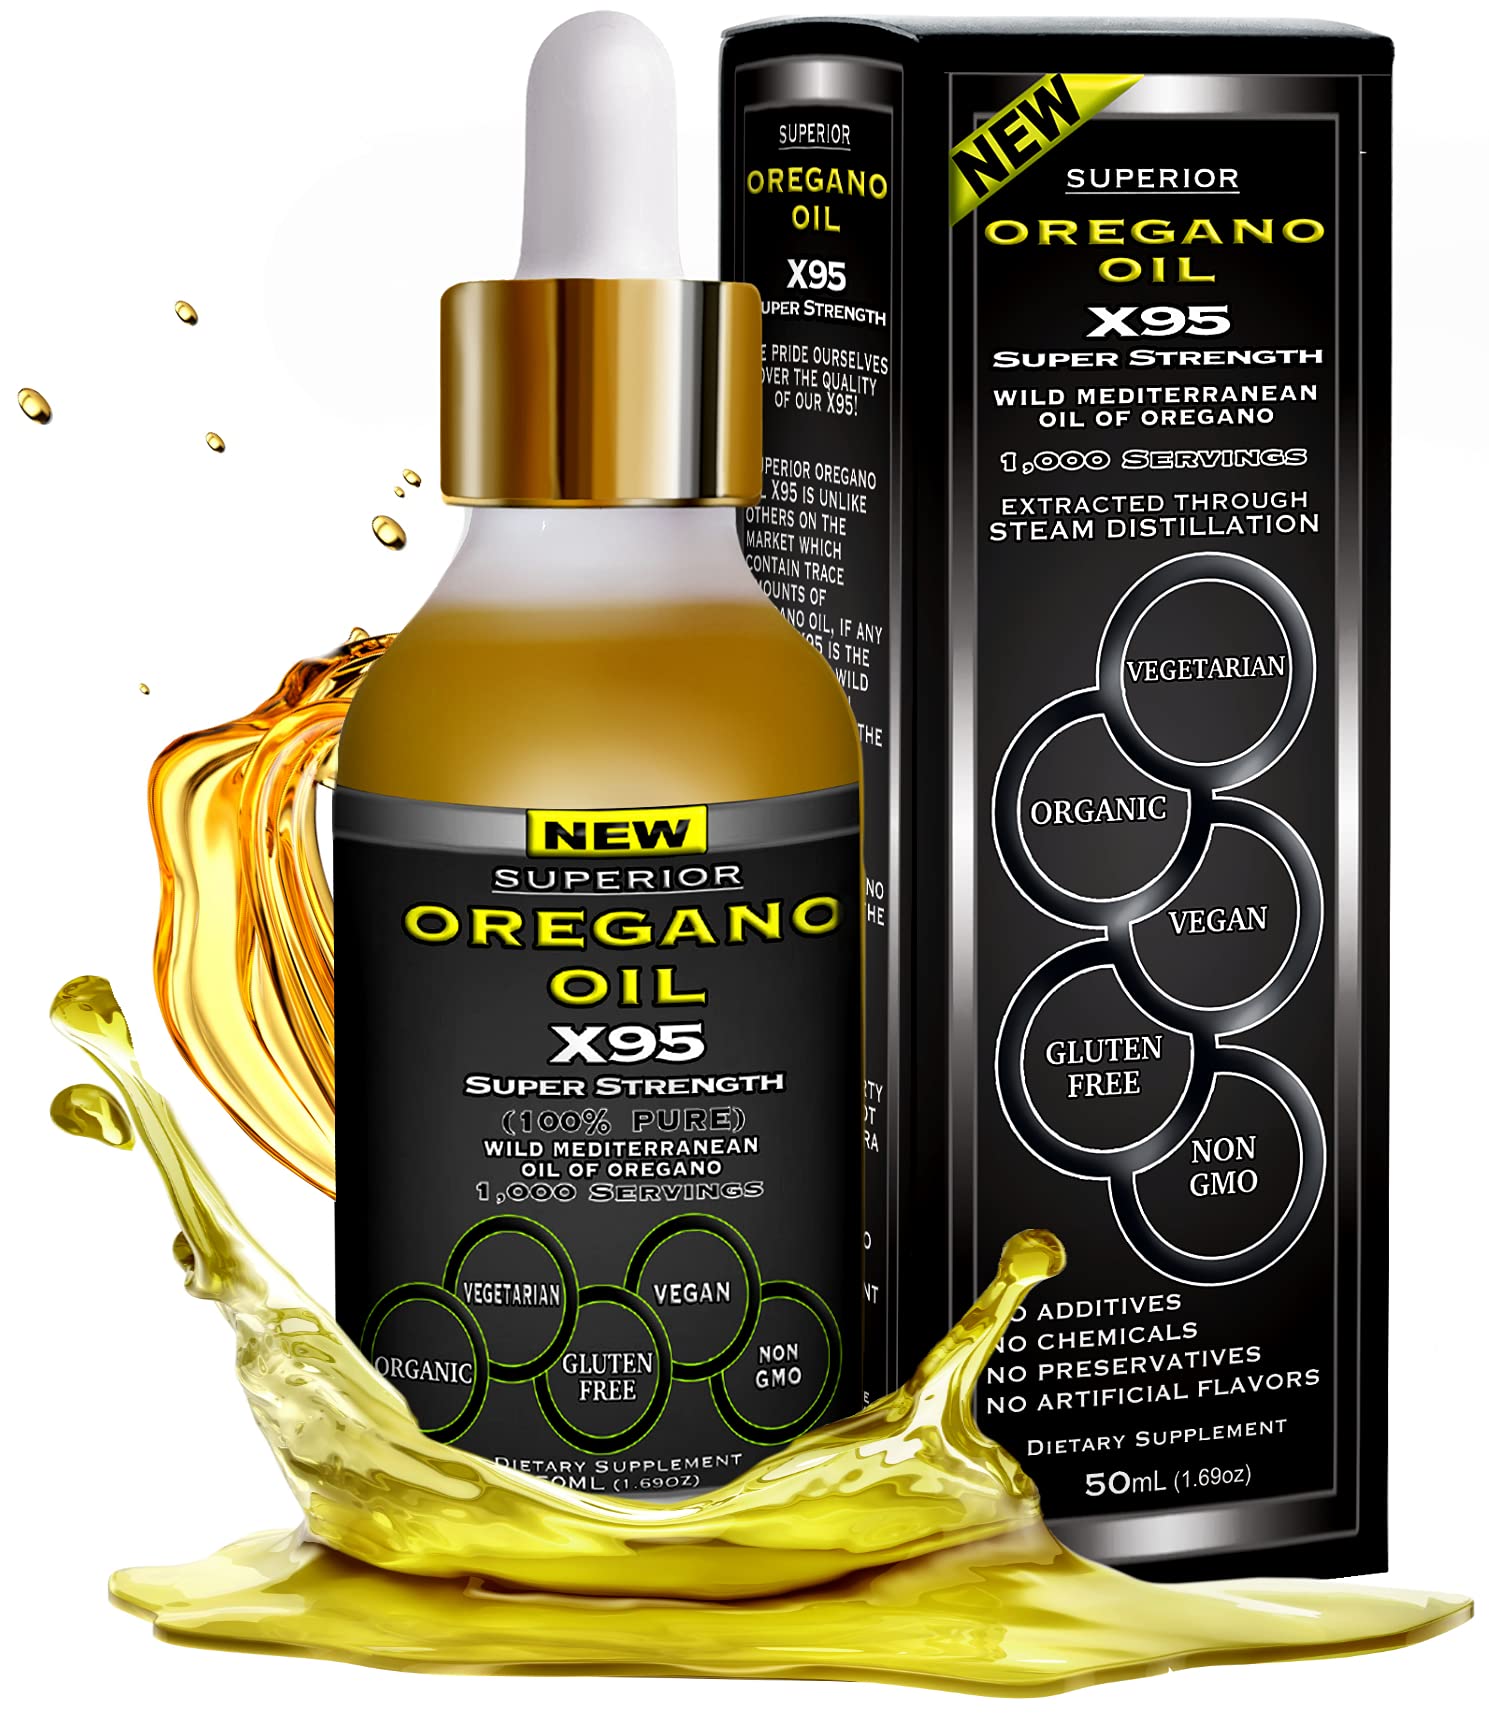 Oregano Oil Drops Super Strength - 1,000 Servings, Food Grade, Pure Undiluted Wild Mediterranean Oil of Oregano Extract, 1.69 oz (Large)